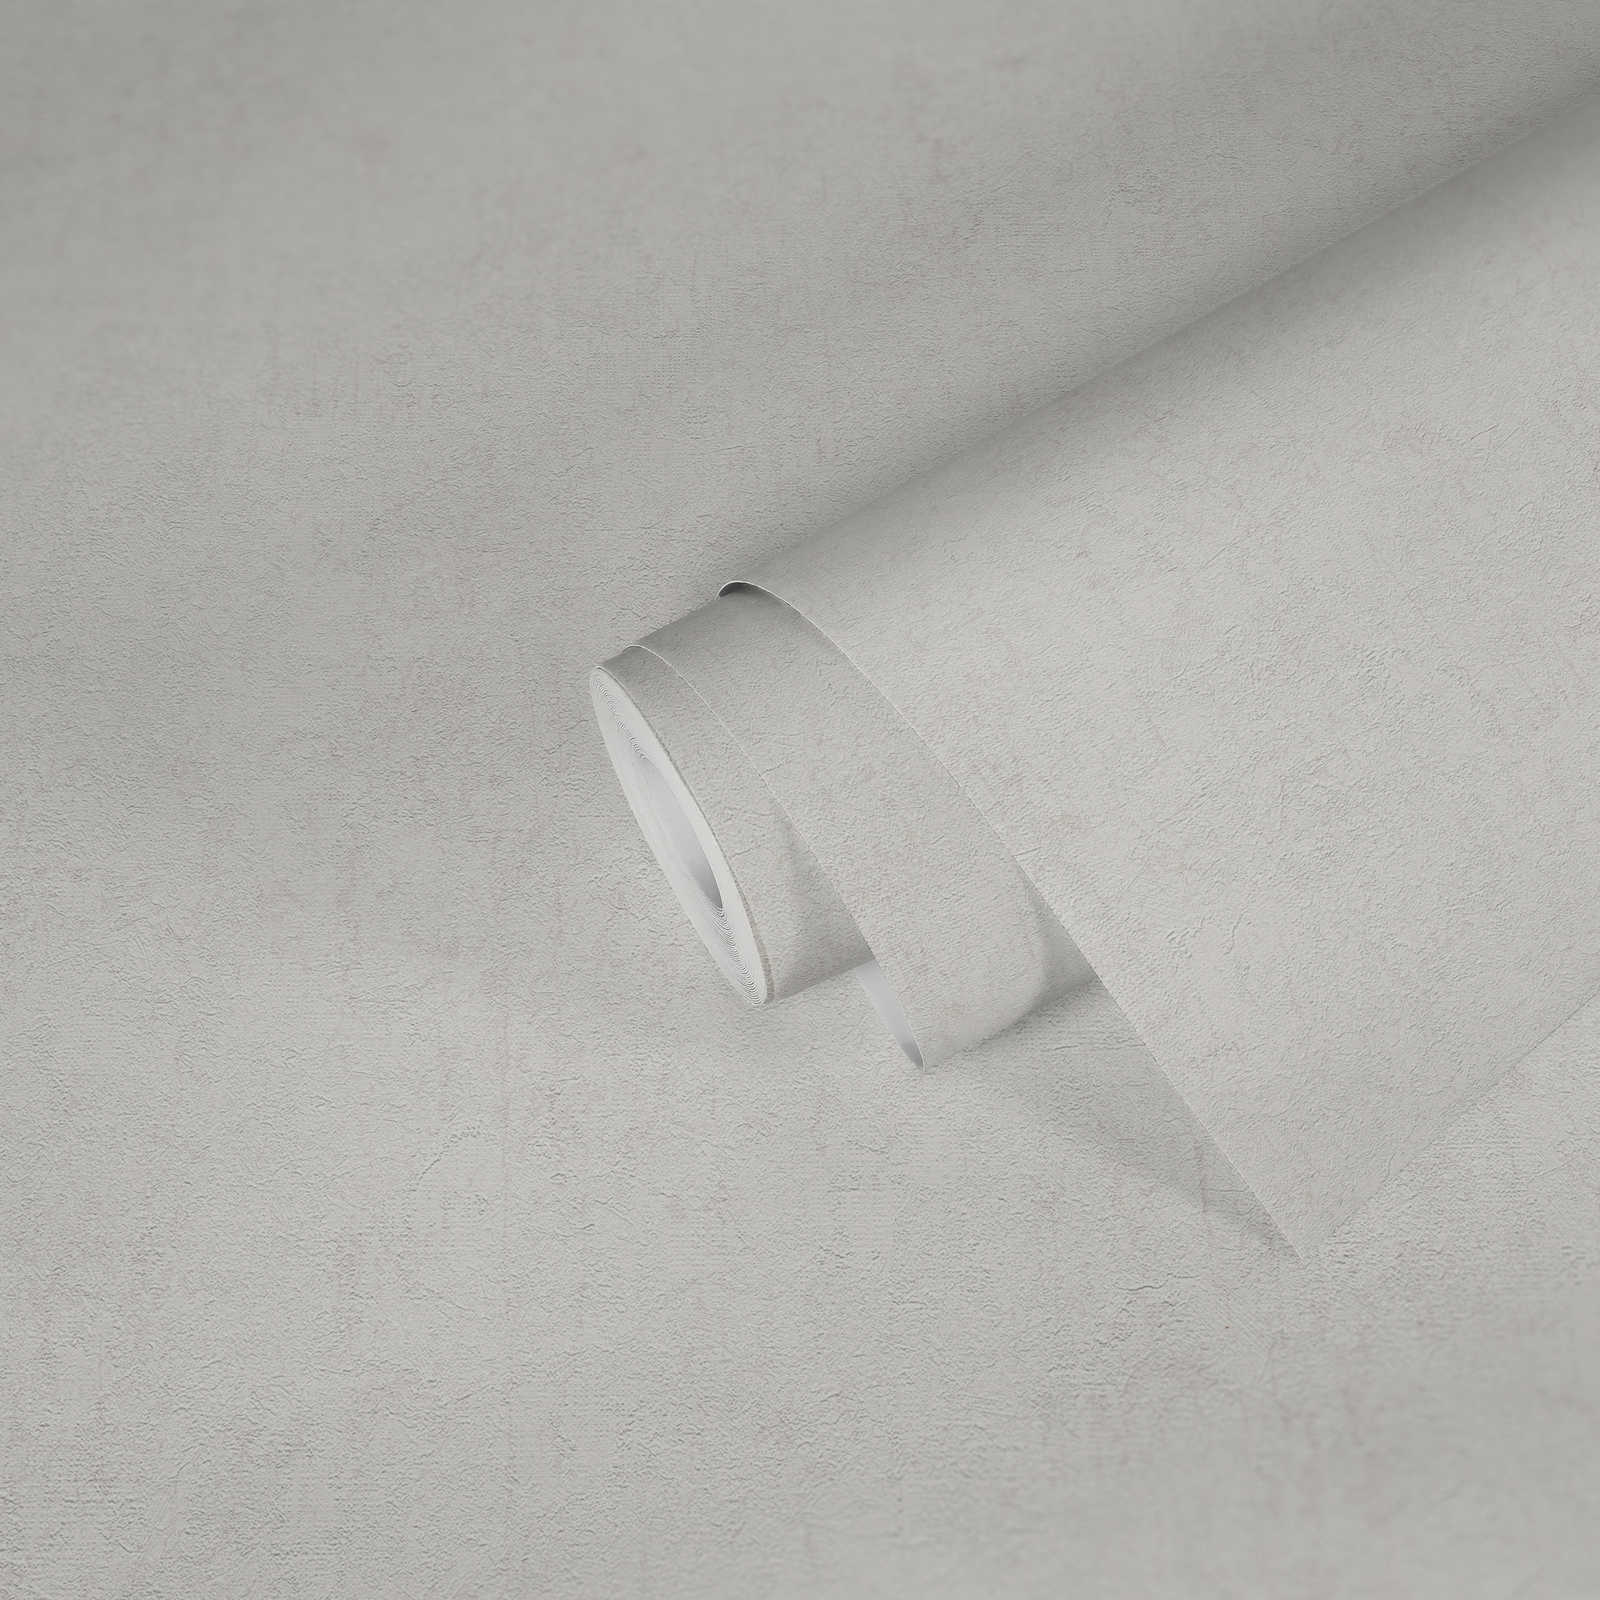             Putzoptik Tapete Cremeweiß mit Used Design – Metallic, Weiß
        